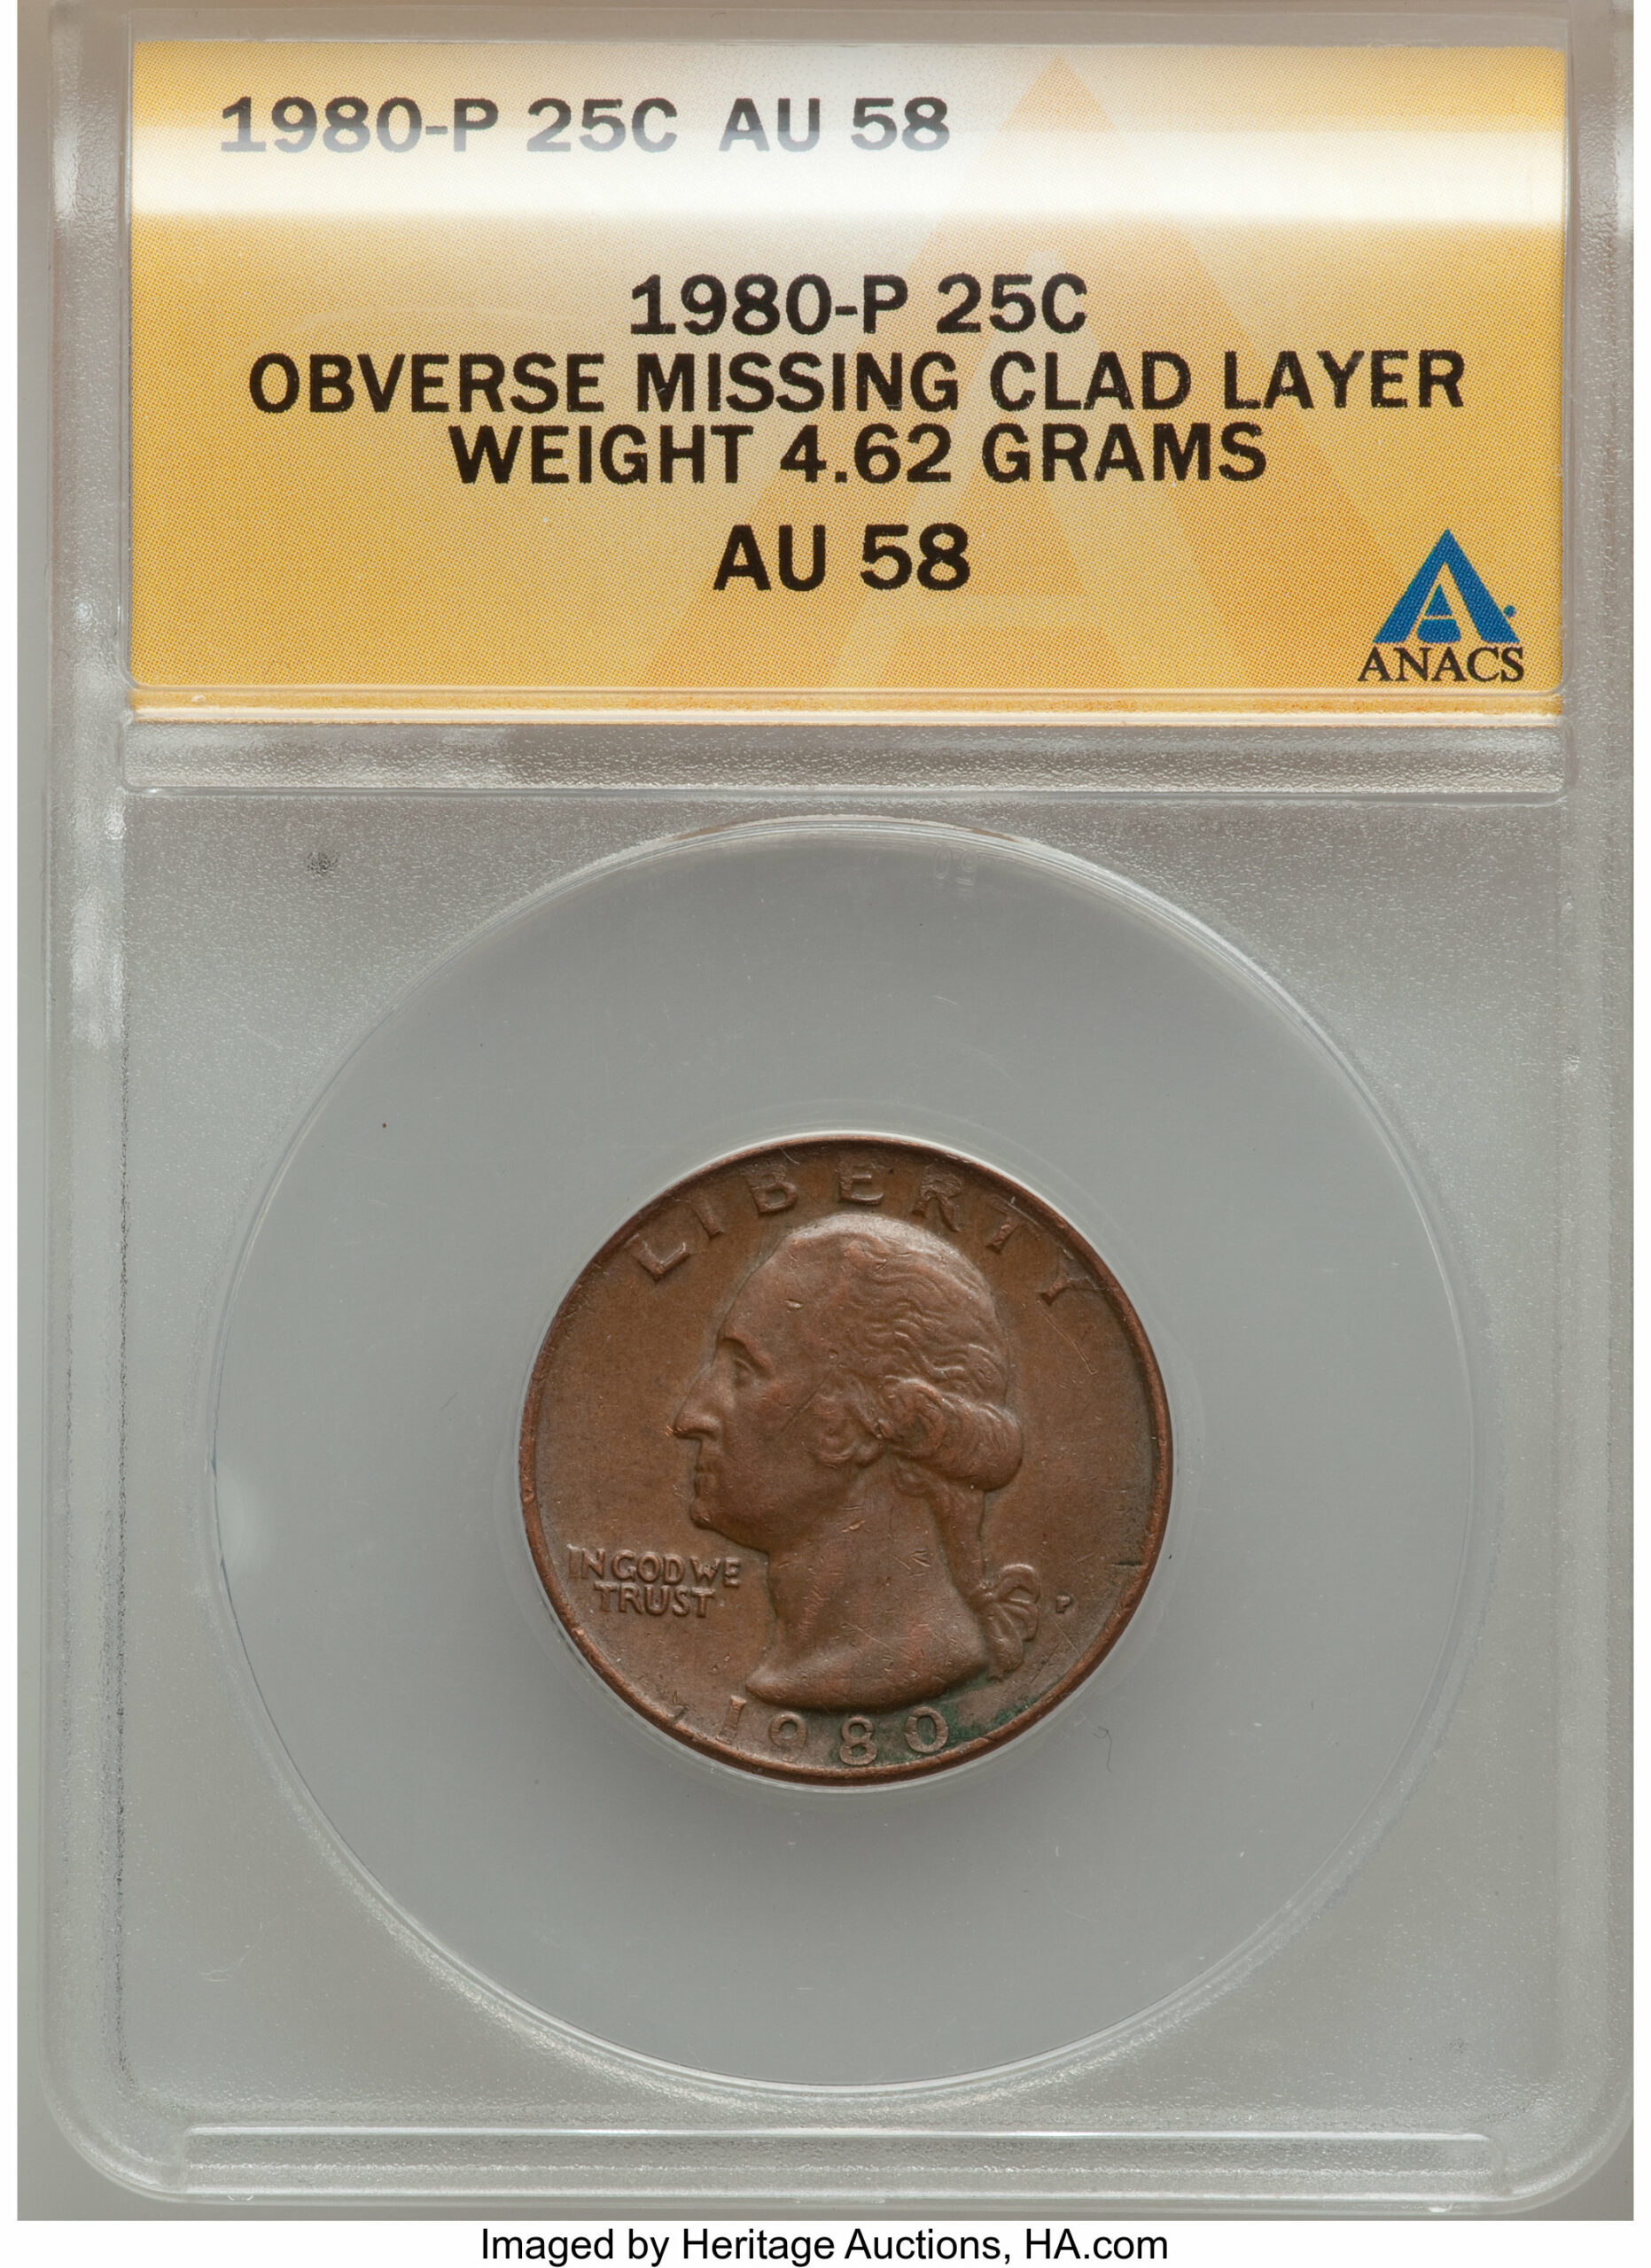 1980 Washington Quarter Missing clad layer on the obverse